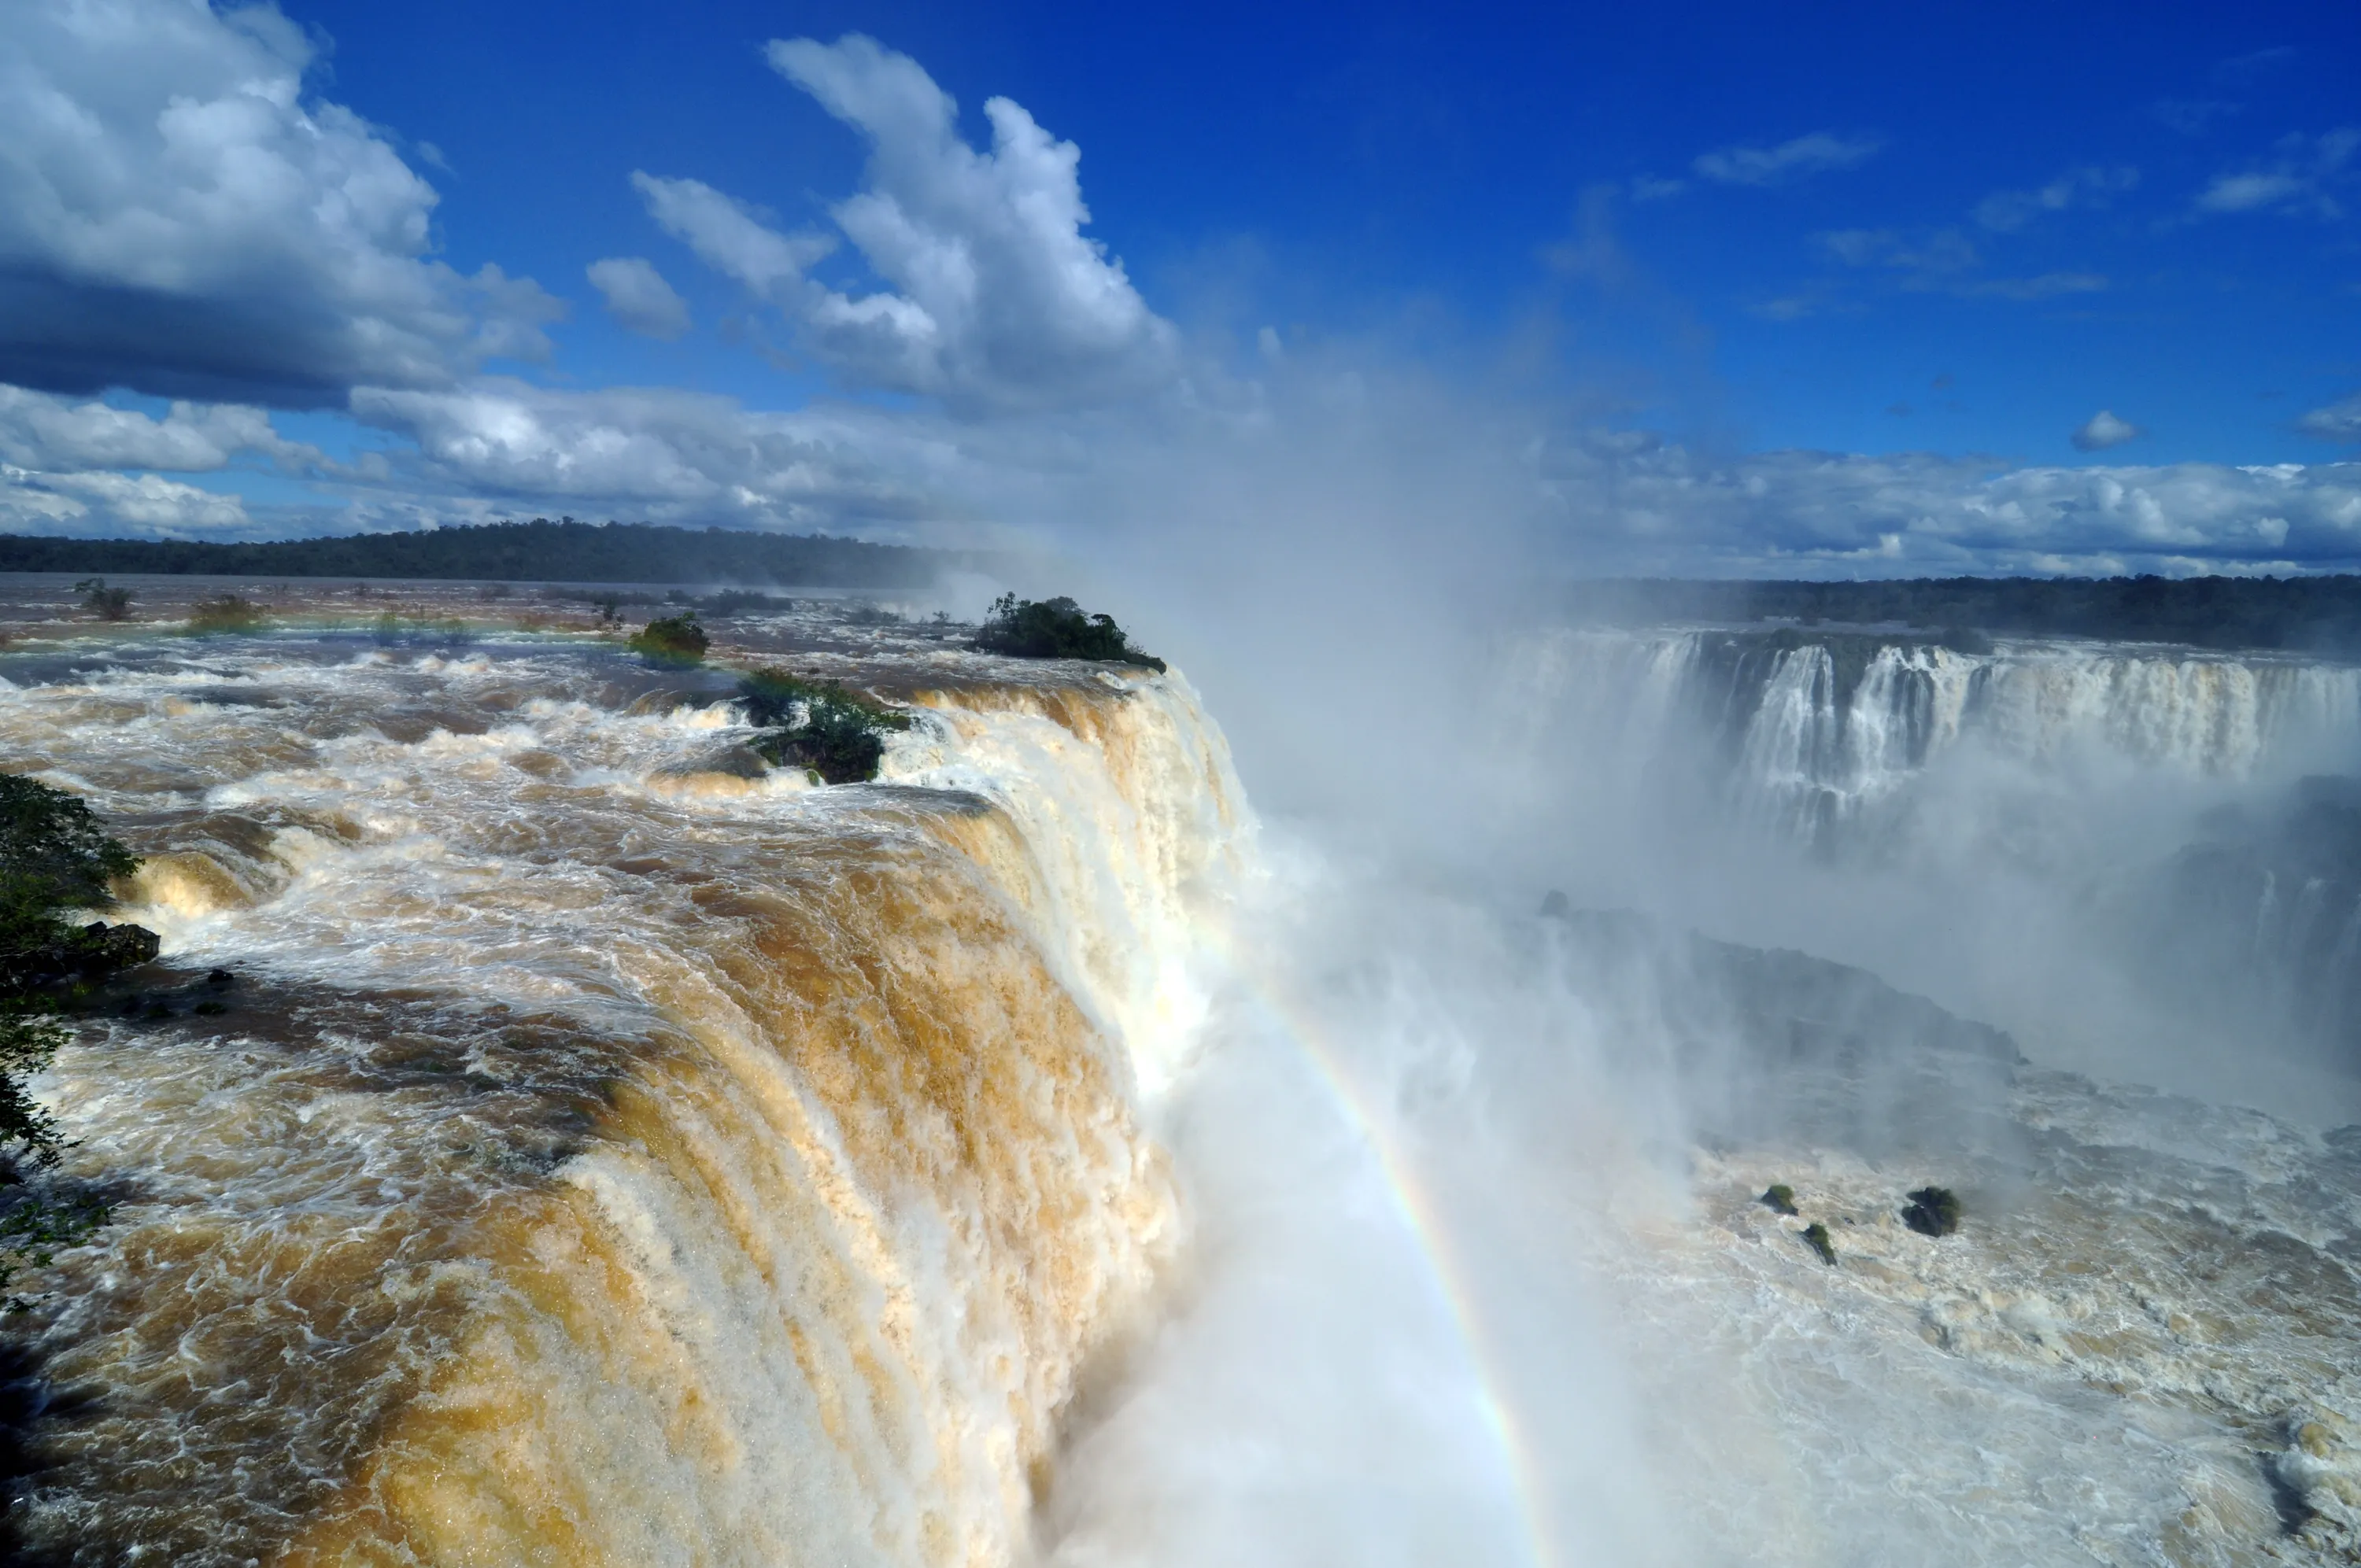 Широкий водопад в южной америке. Водопады Игуасу Аргентина Бразилия. Парана водопад. Водопад Венесуэла Колумбия Бразилия. Большой водопад в Бразилии.